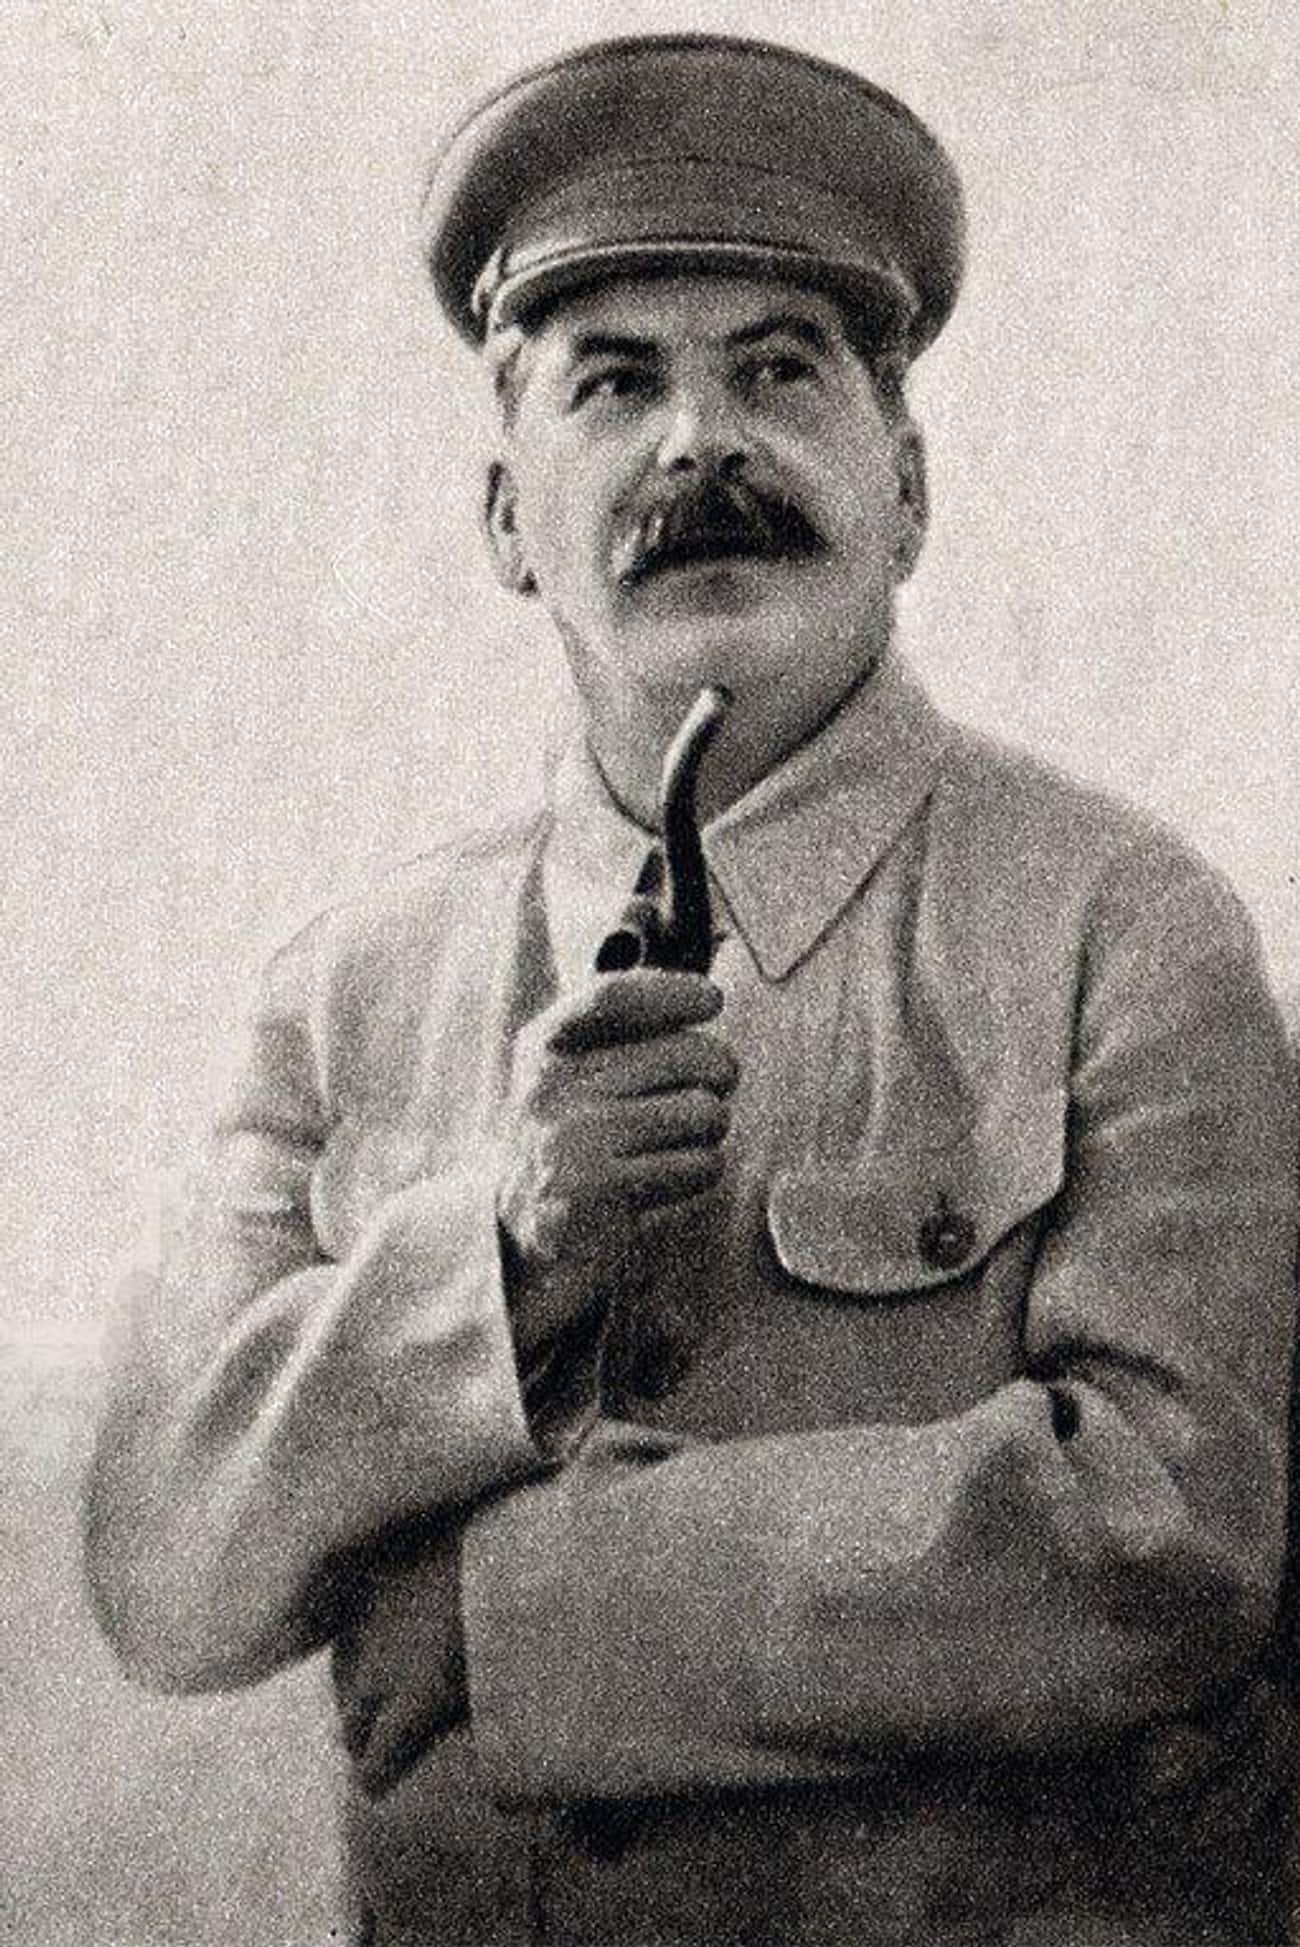 Weatherman - Joseph Stalin, Premier Of The Soviet Union